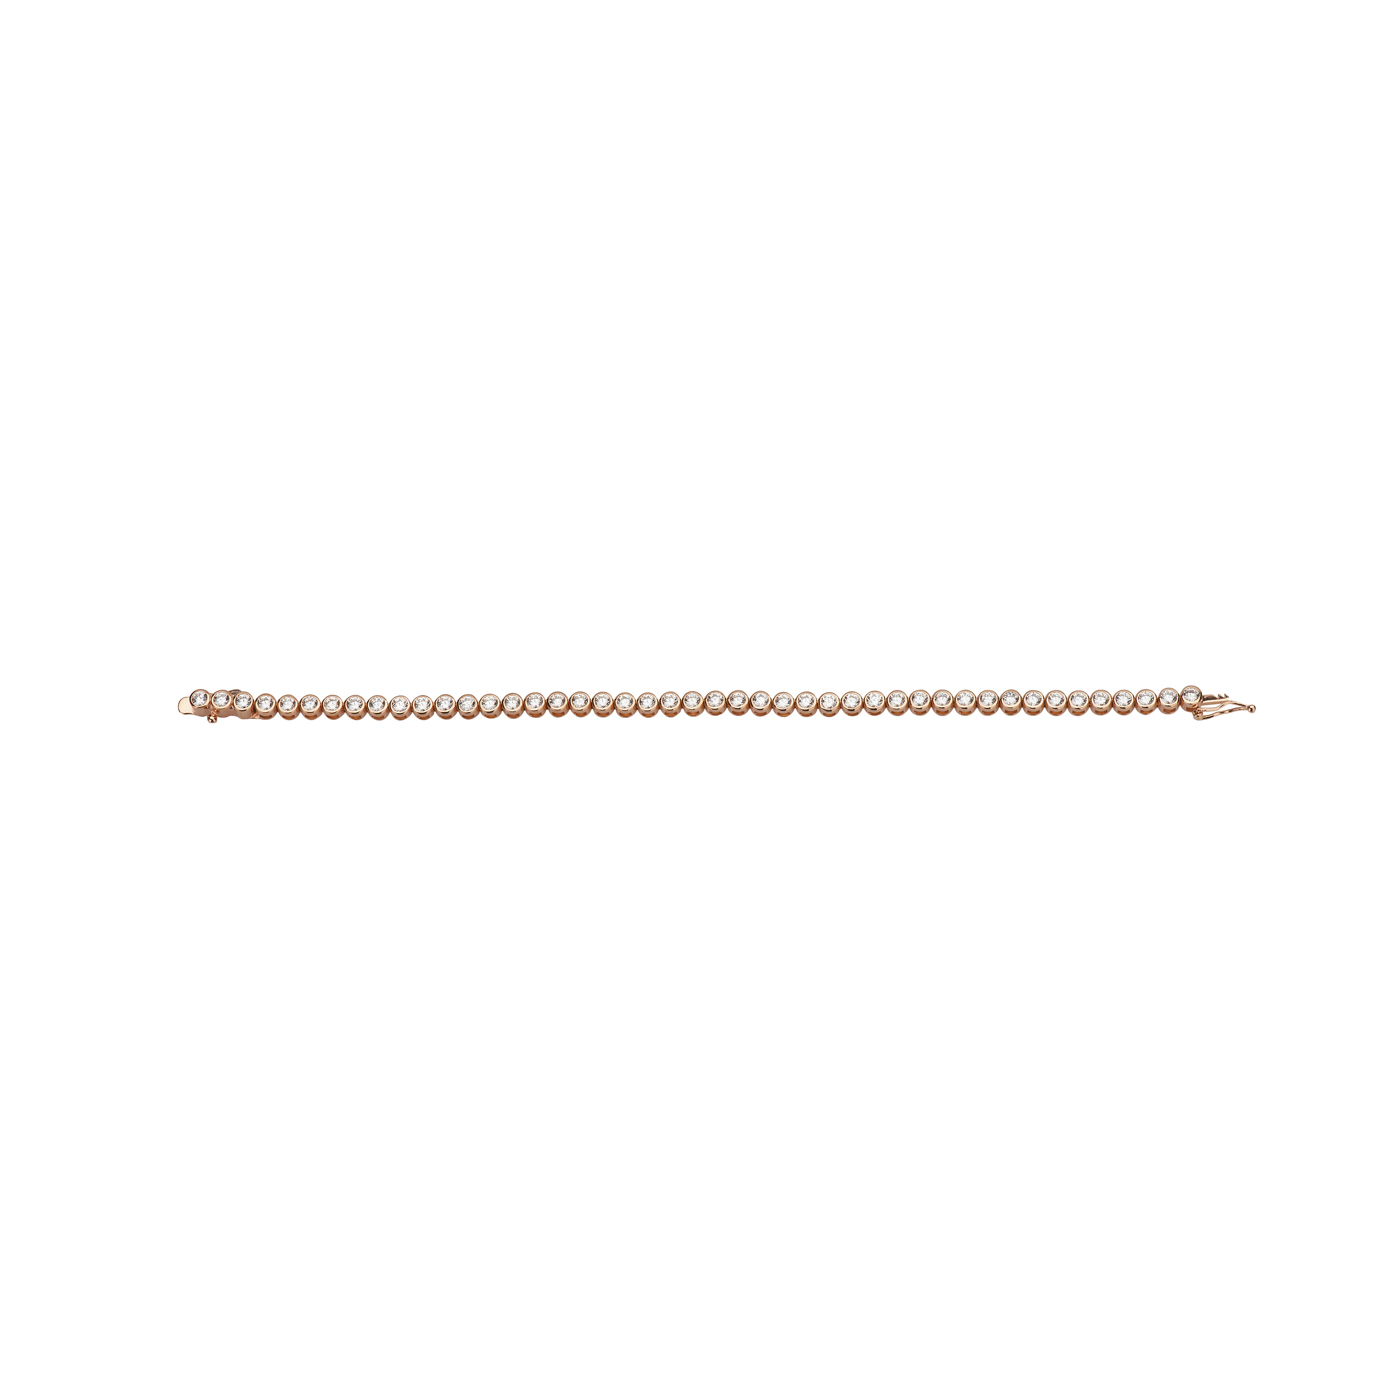 Armband, 925 Ag rosé vergoldet, Länge 19 cm, Zirkonia weiß - 1 Stück